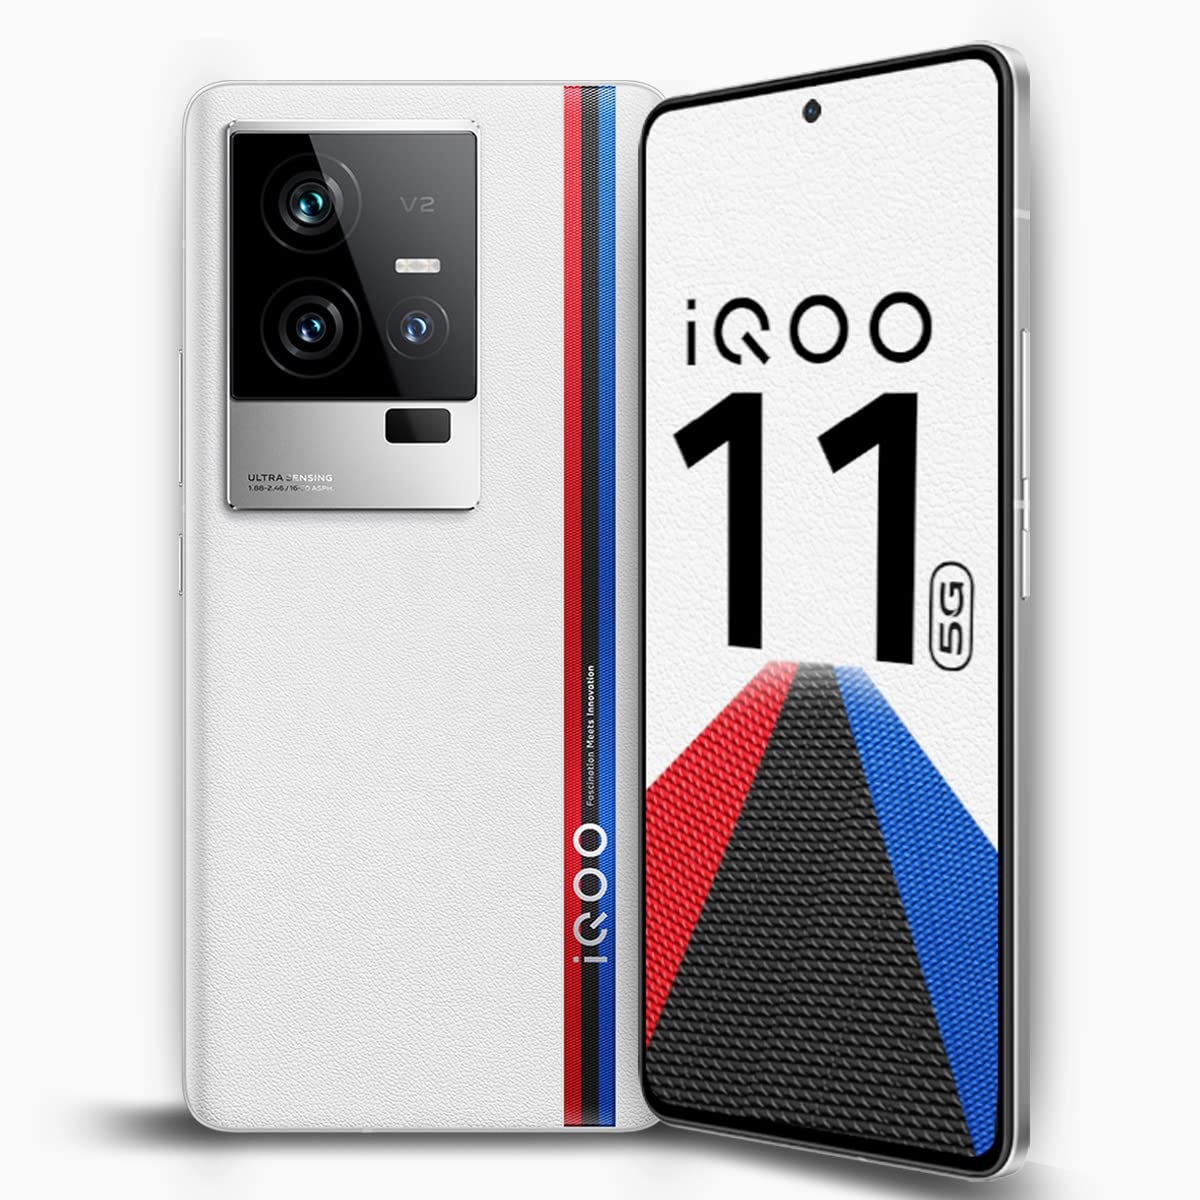 Iq00 12 Pro : Unleashing the Power of Innovation